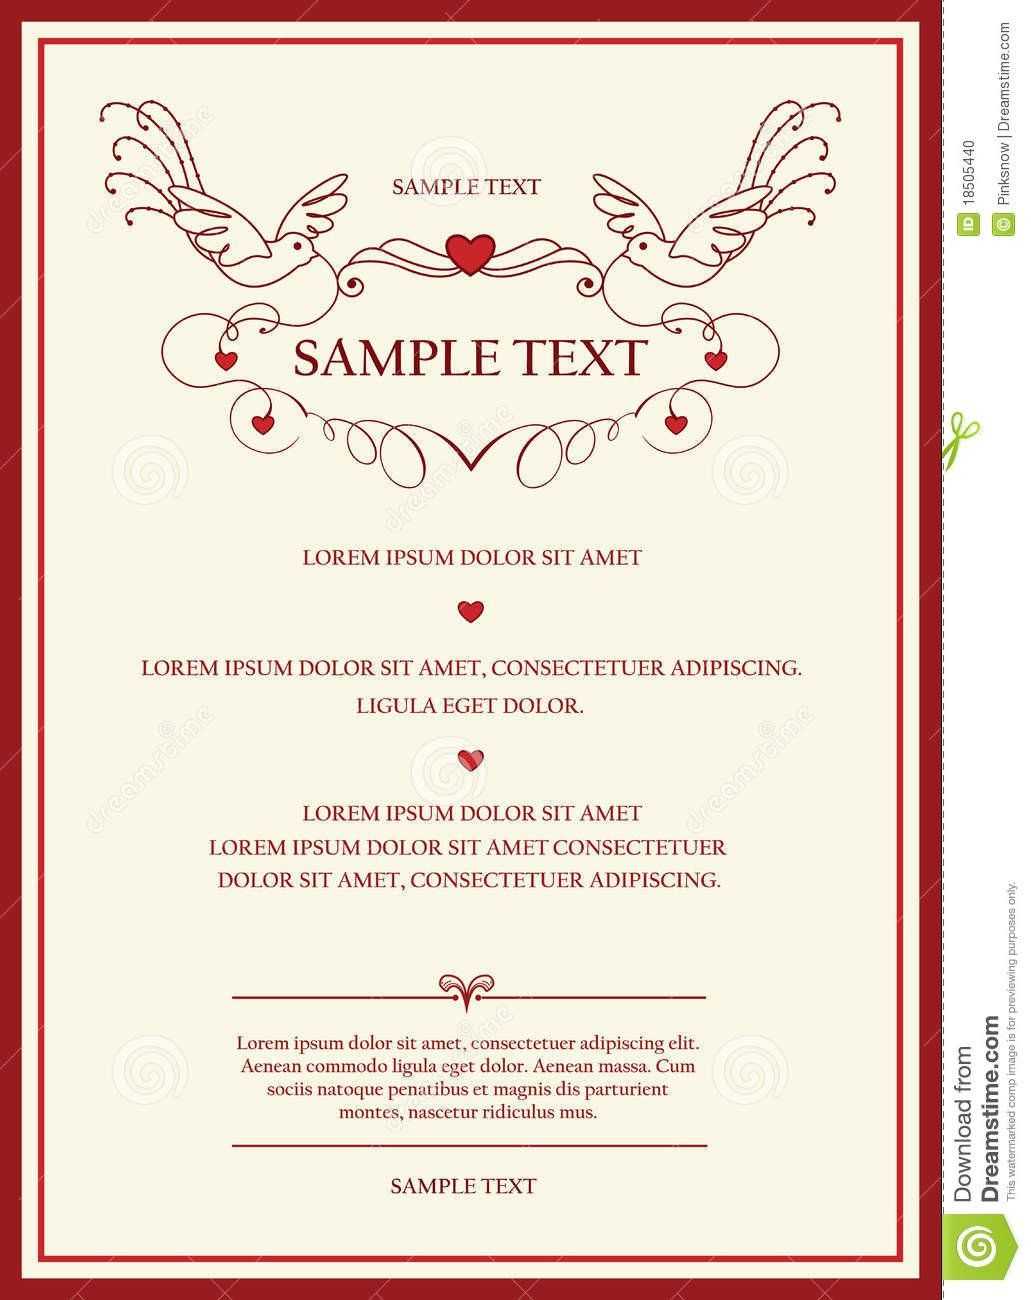 Wedding Invitation Cards Templates | Wedding Invitations In With Sample Wedding Invitation Cards Templates